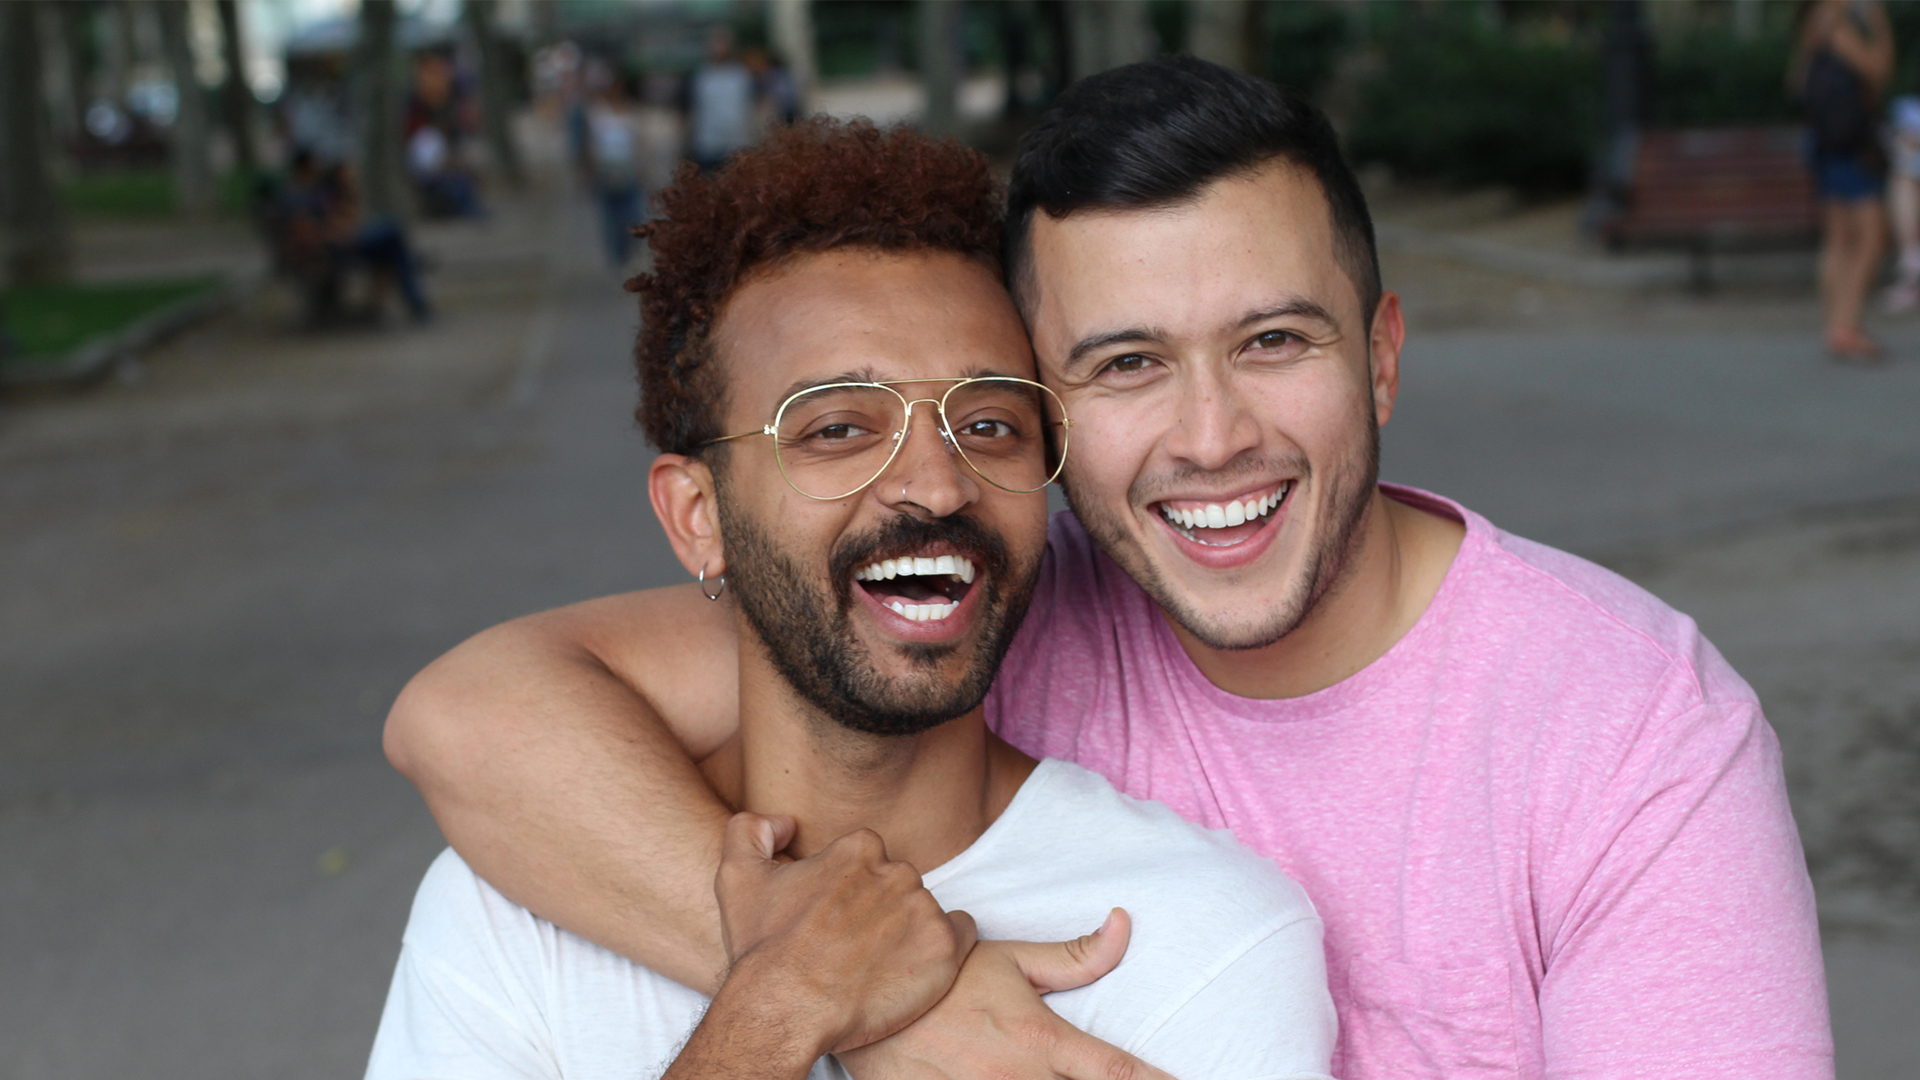 Interracial Couples More Common Among Same-Sex Couples